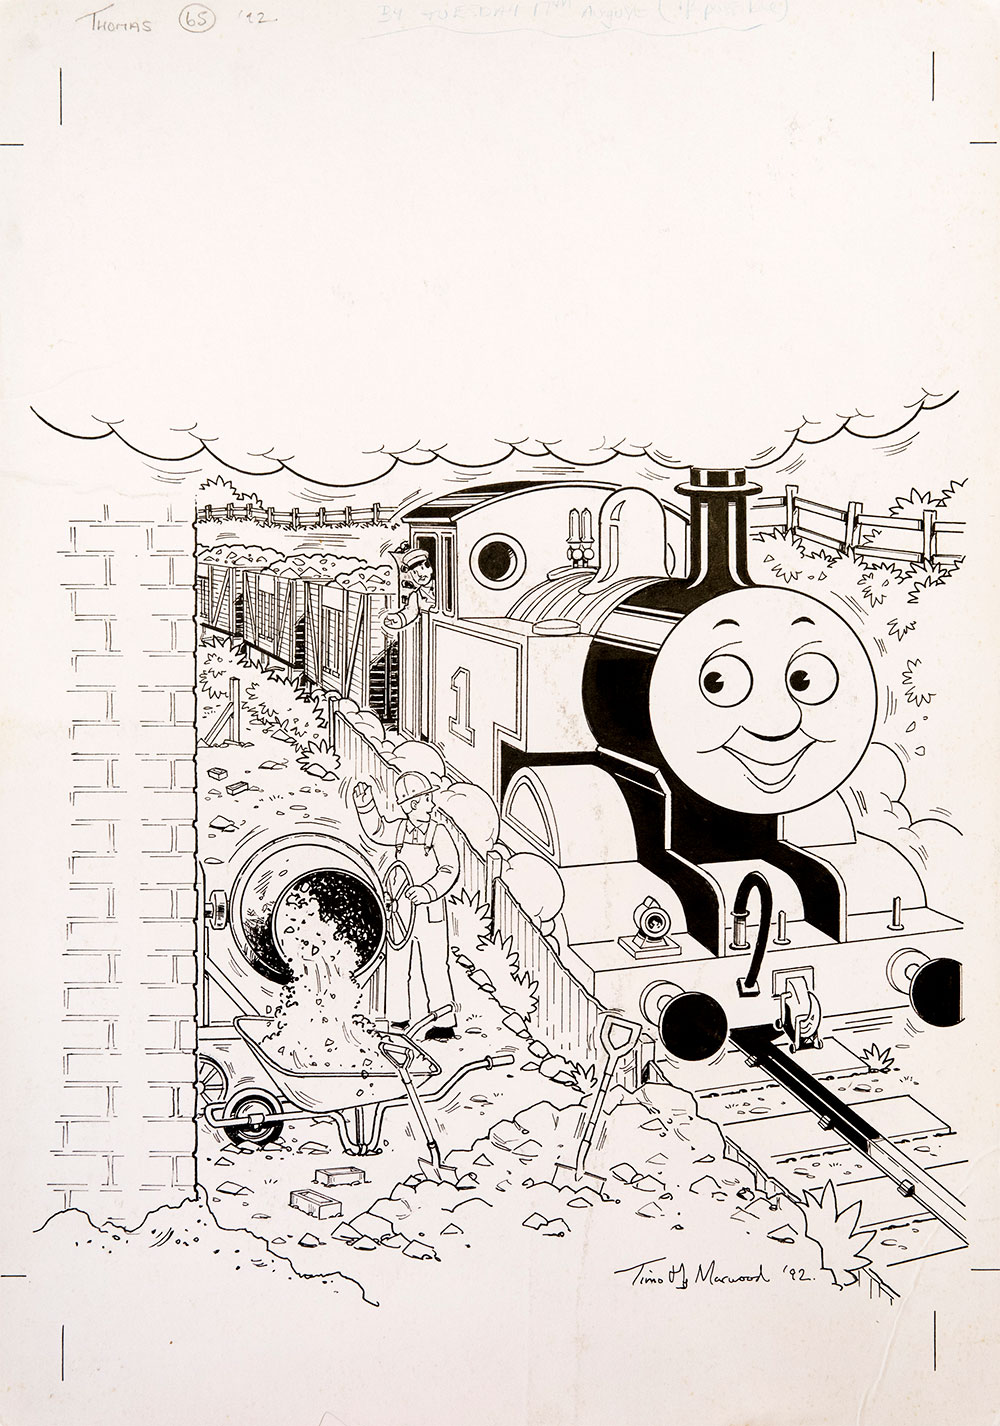 Opposites, Issue #65 (1992) - Thomas the Tank Engine [089/160]